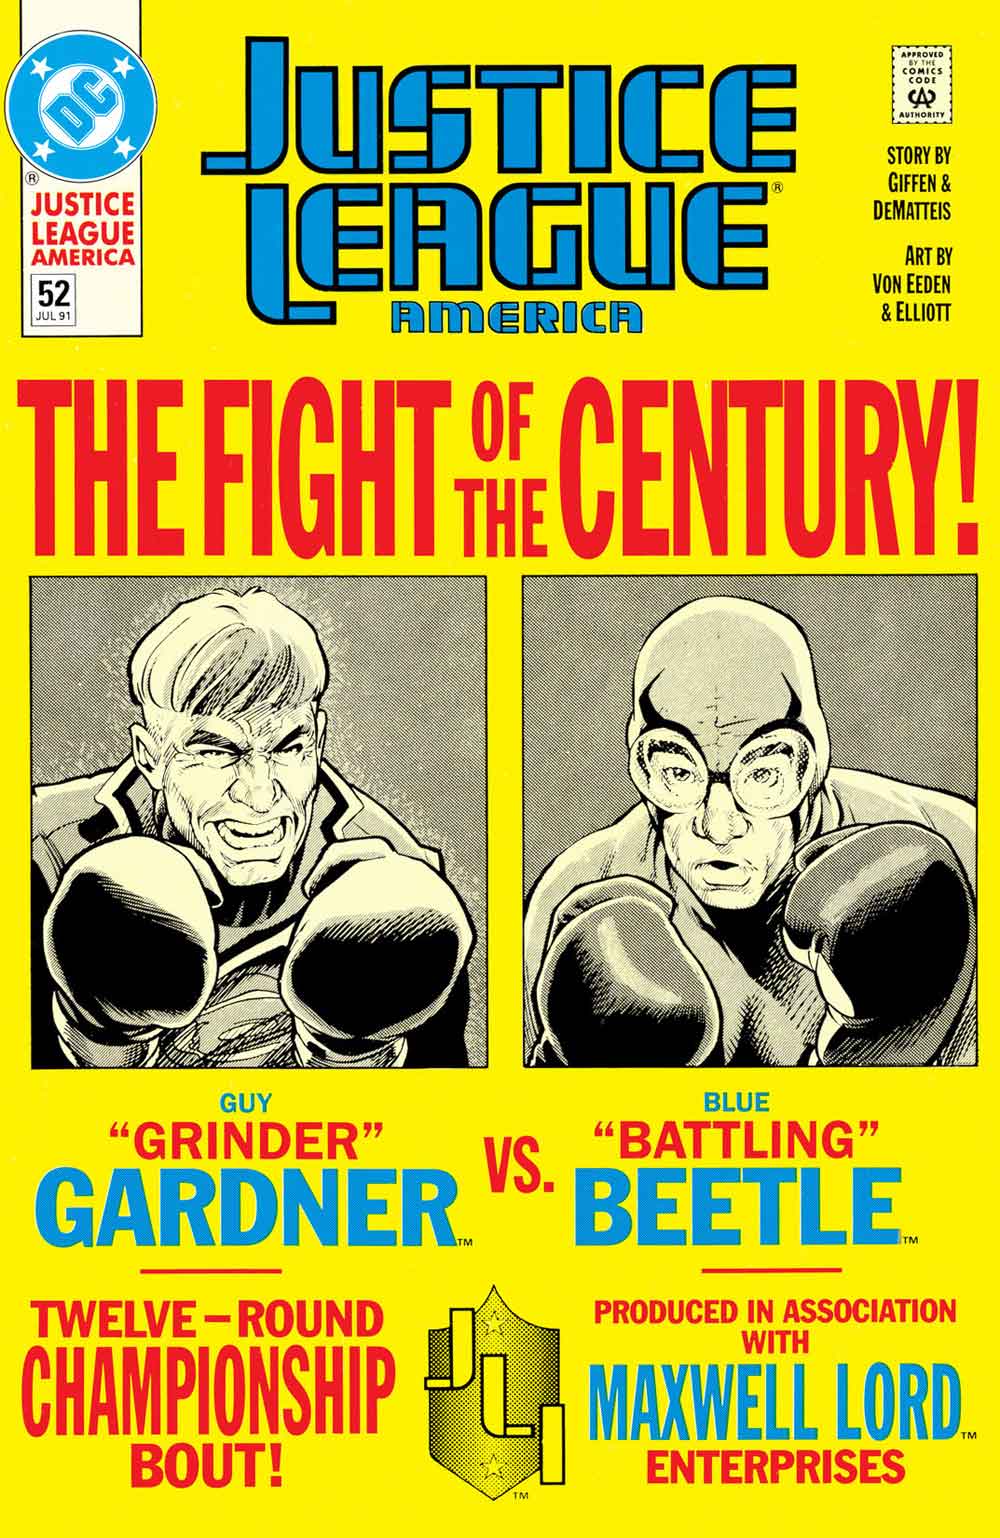 Justice League America #52 cover by Adam Hughes & Joe Rubinstein